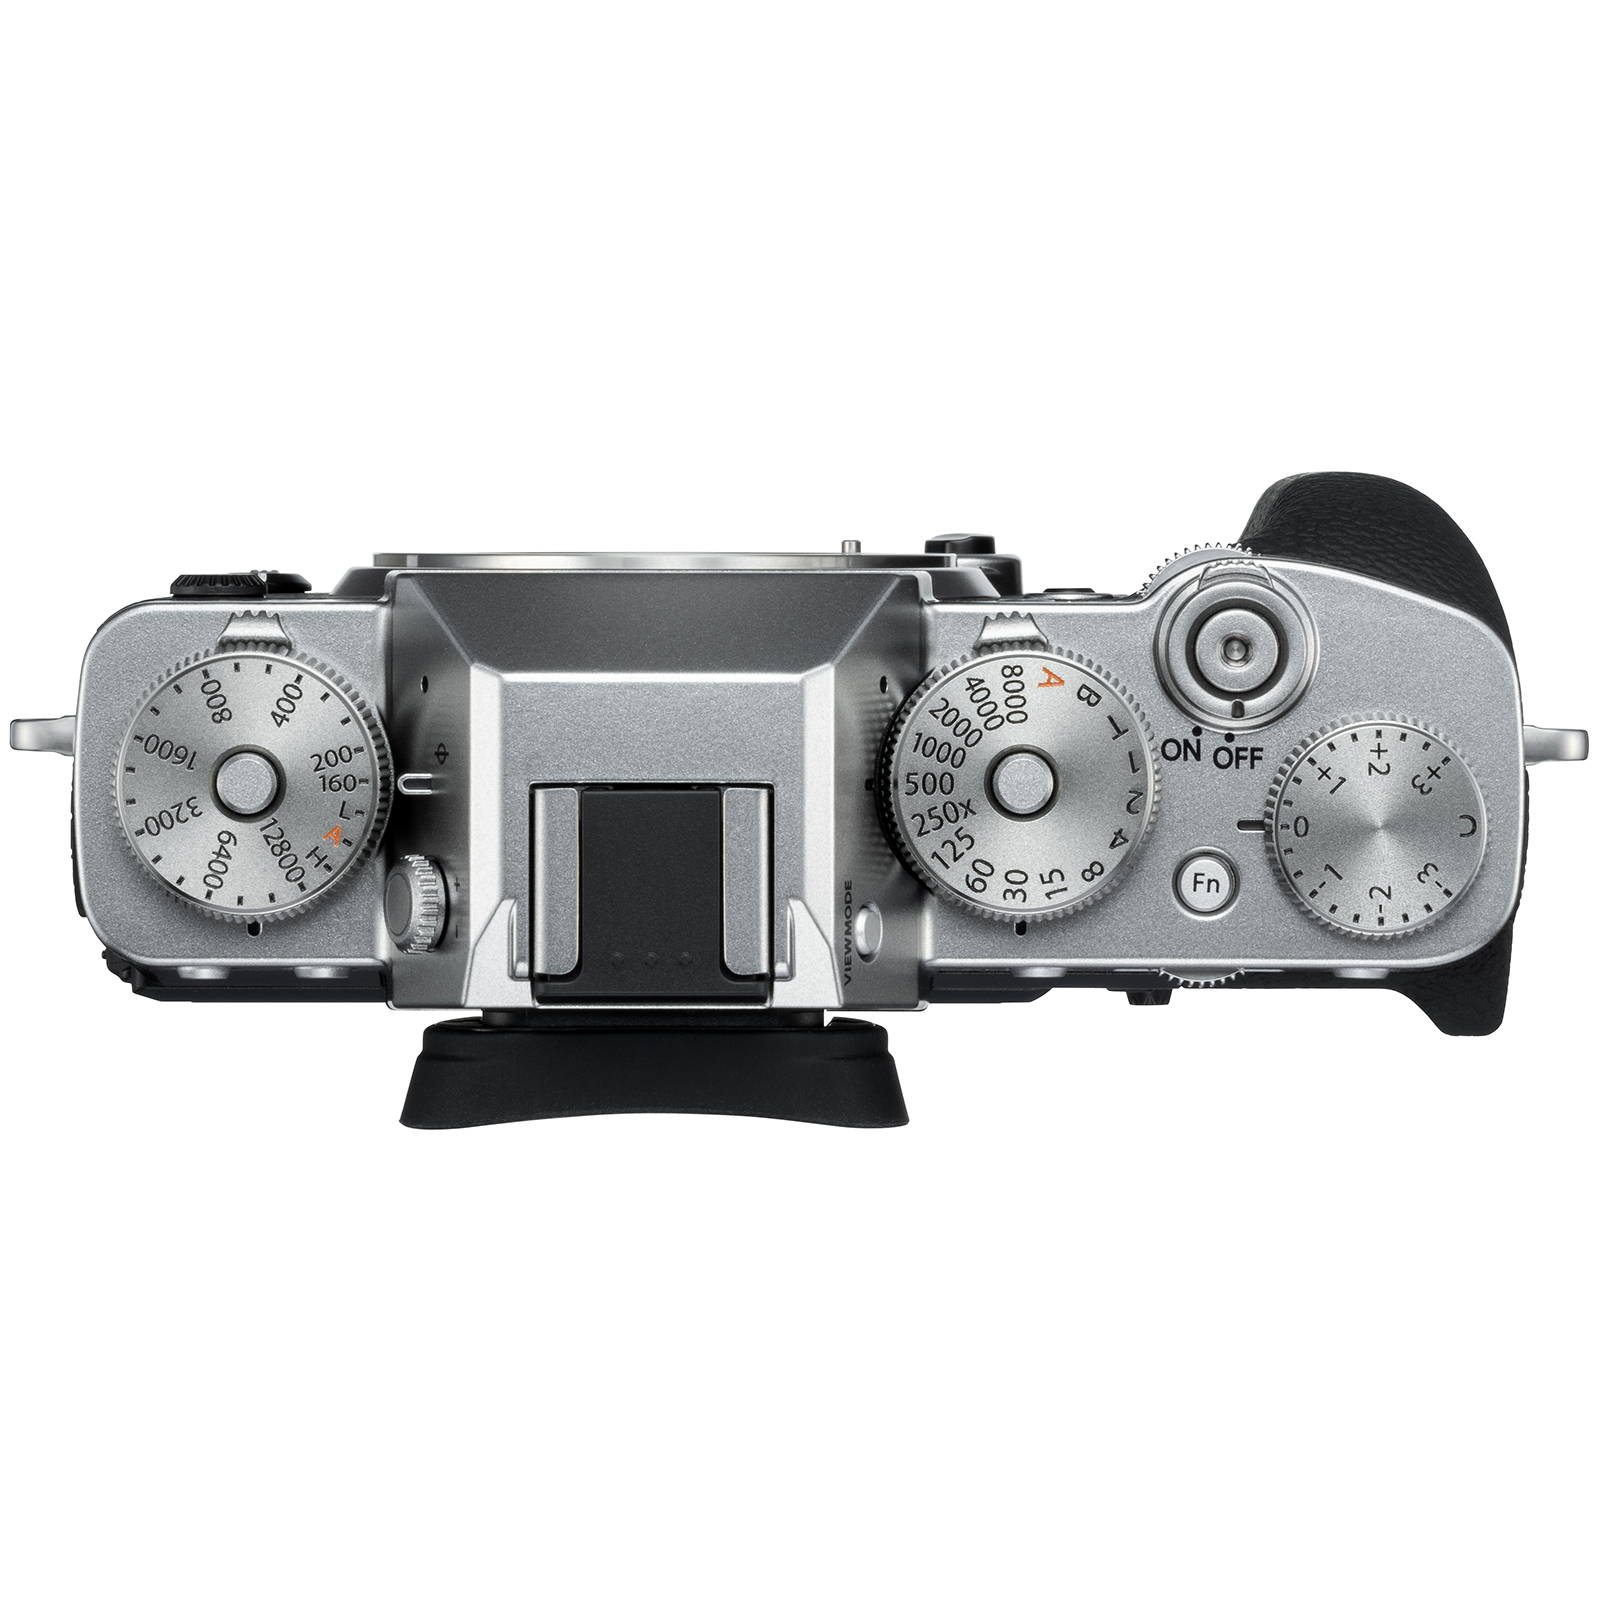 Fujifilm X-T3 26.1MP Mirrorless Digital Camera - Body Only (Silver) - image 3 of 6